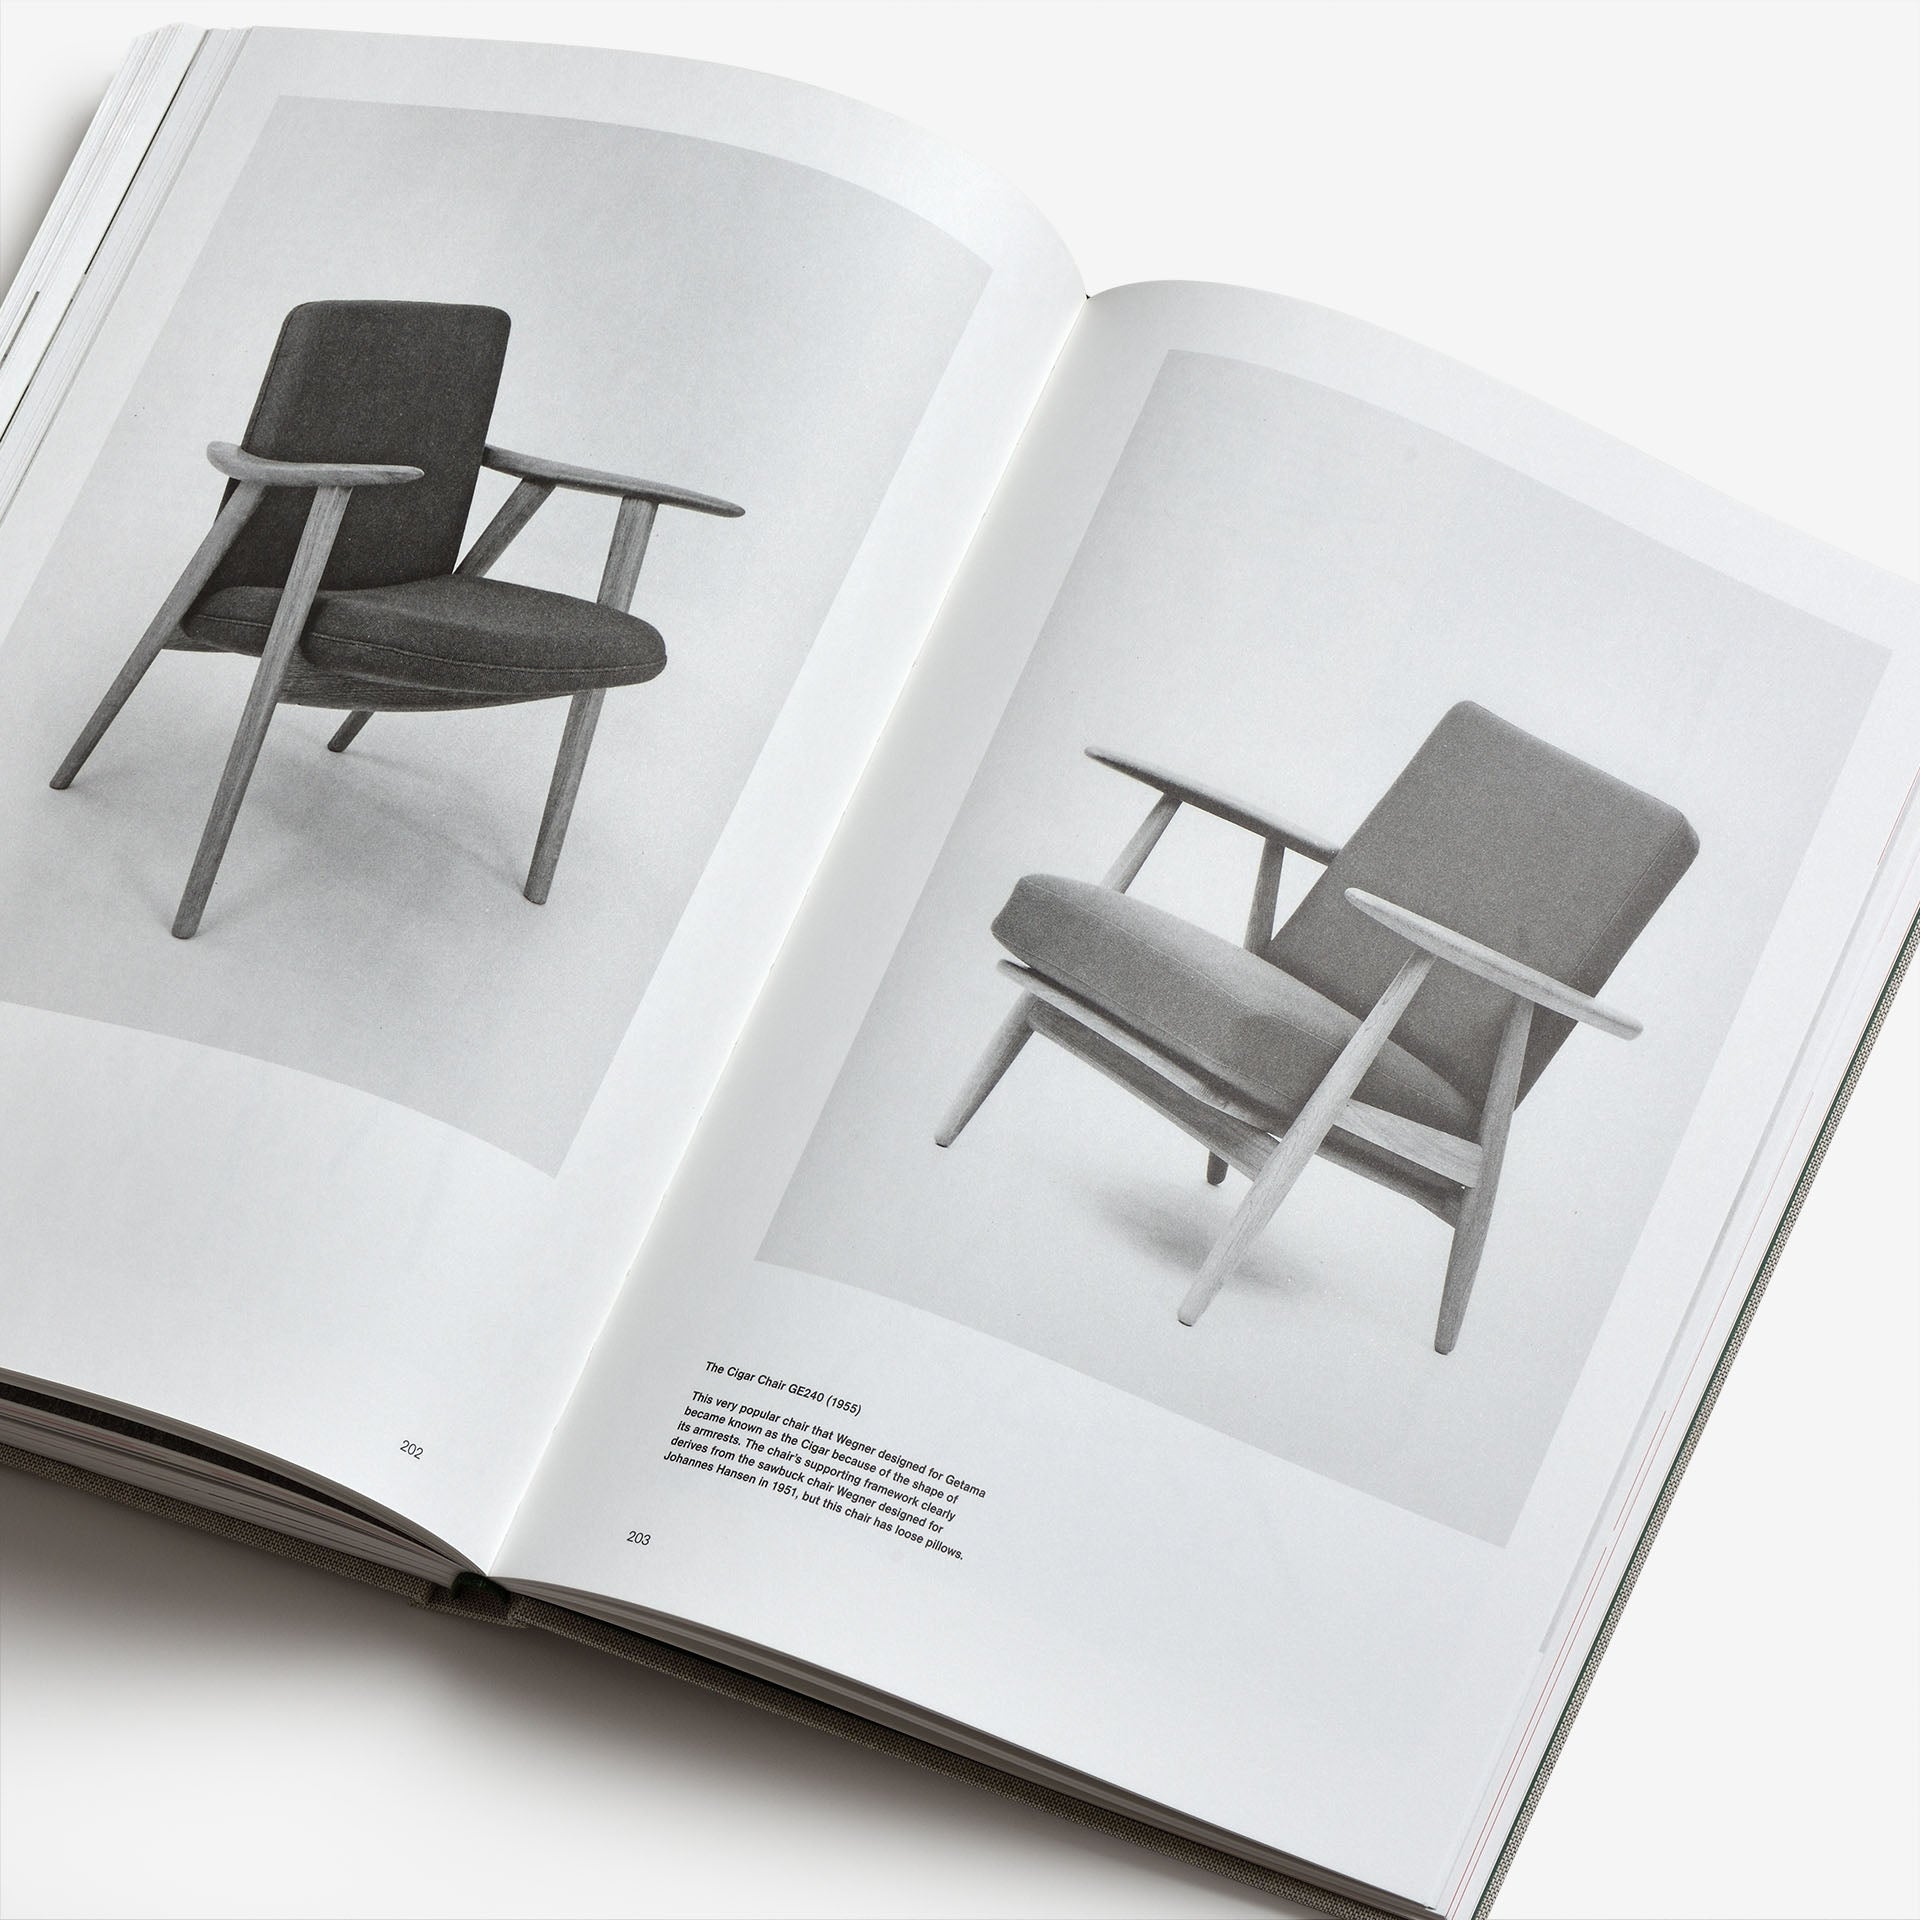 Hans J. Wegner: Just One Good Chair | North East